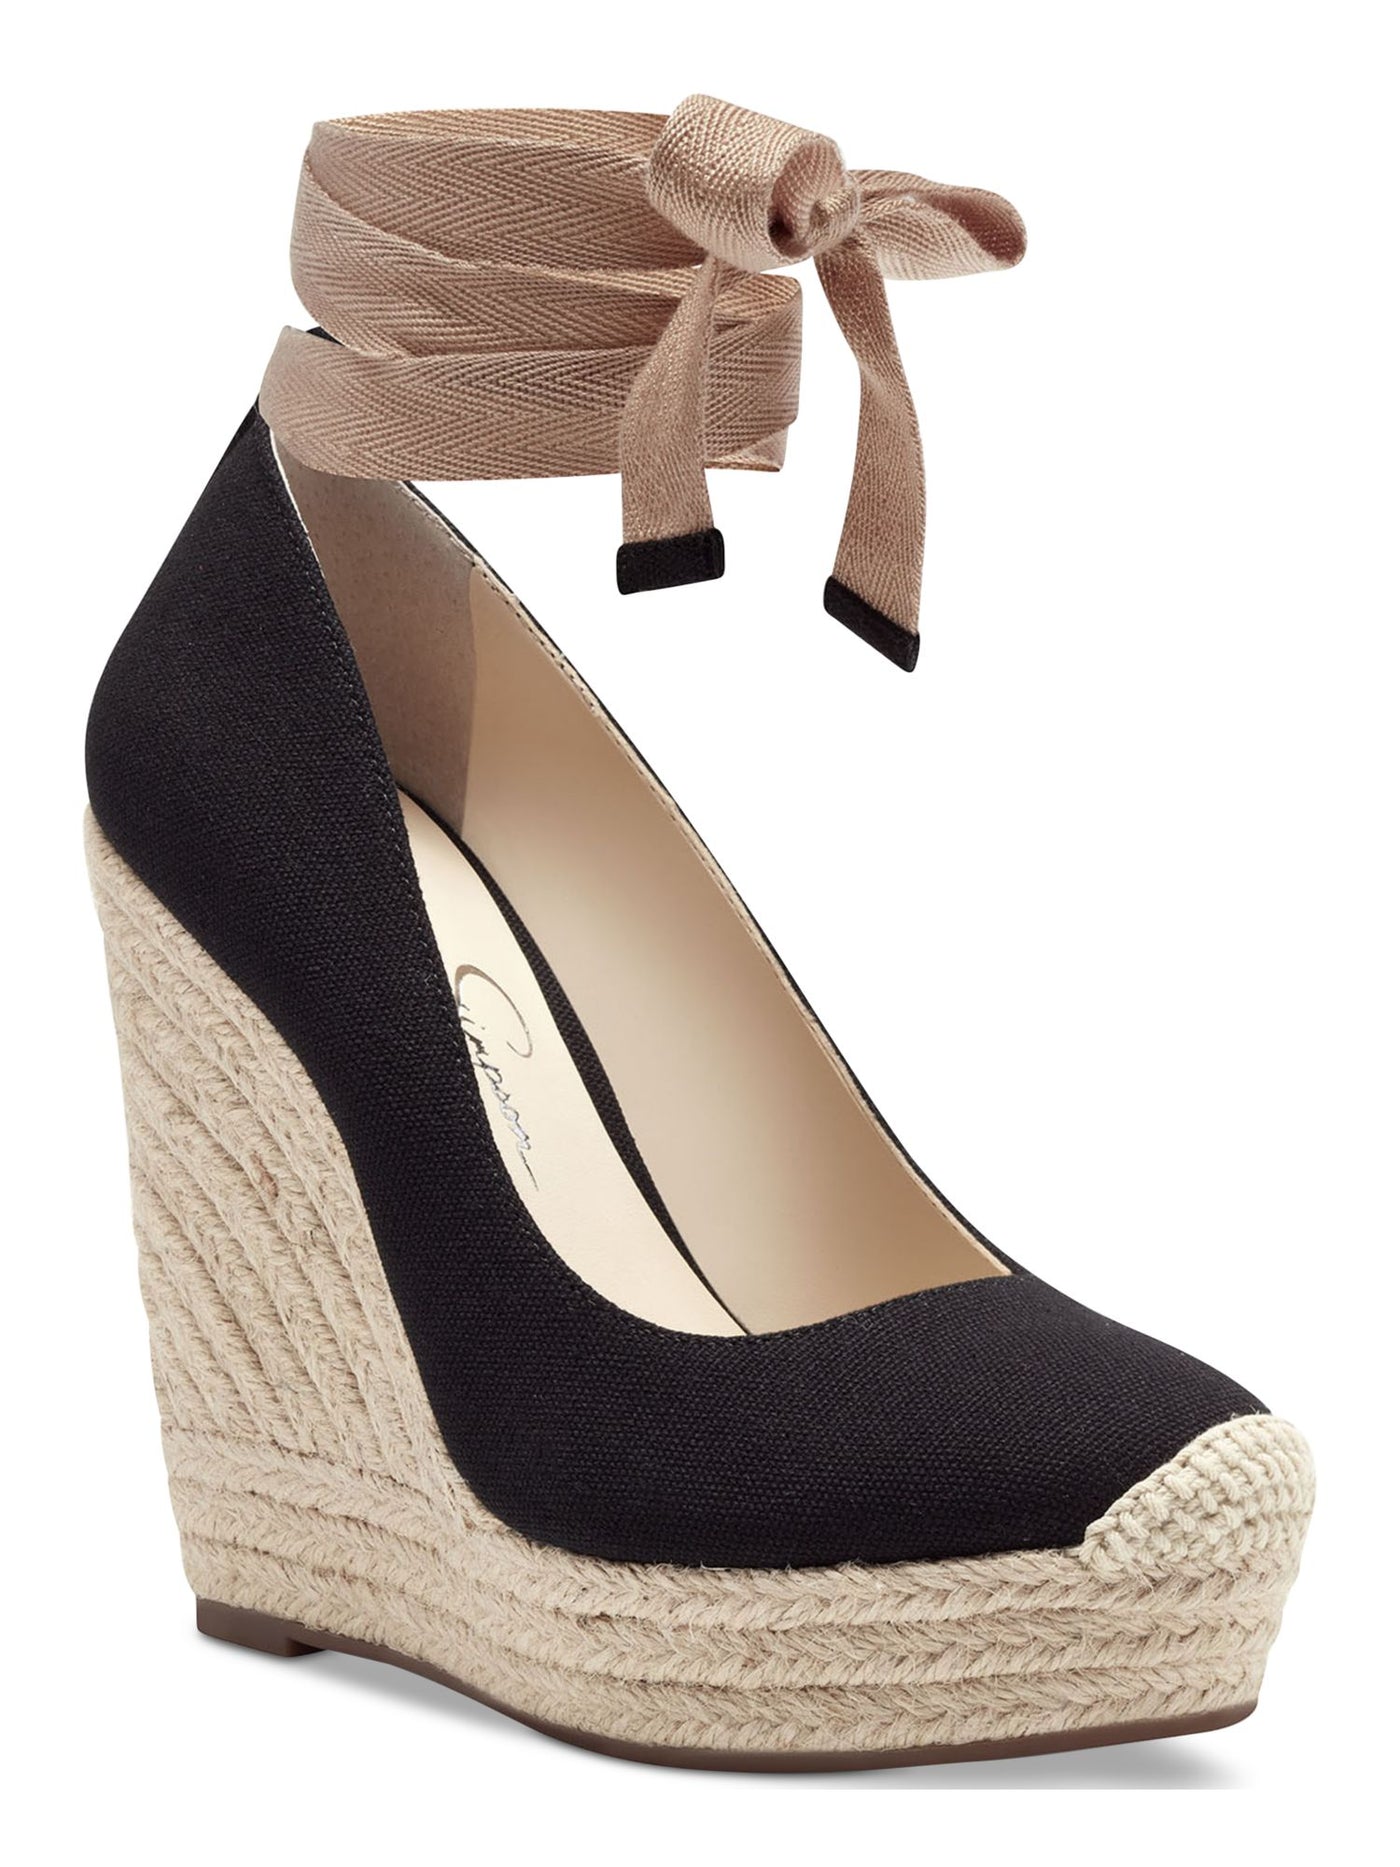 JESSICA SIMPSON Womens Black 1" Platform Comfort Zexie Round Toe Wedge Lace-Up Espadrille Shoes 9 M